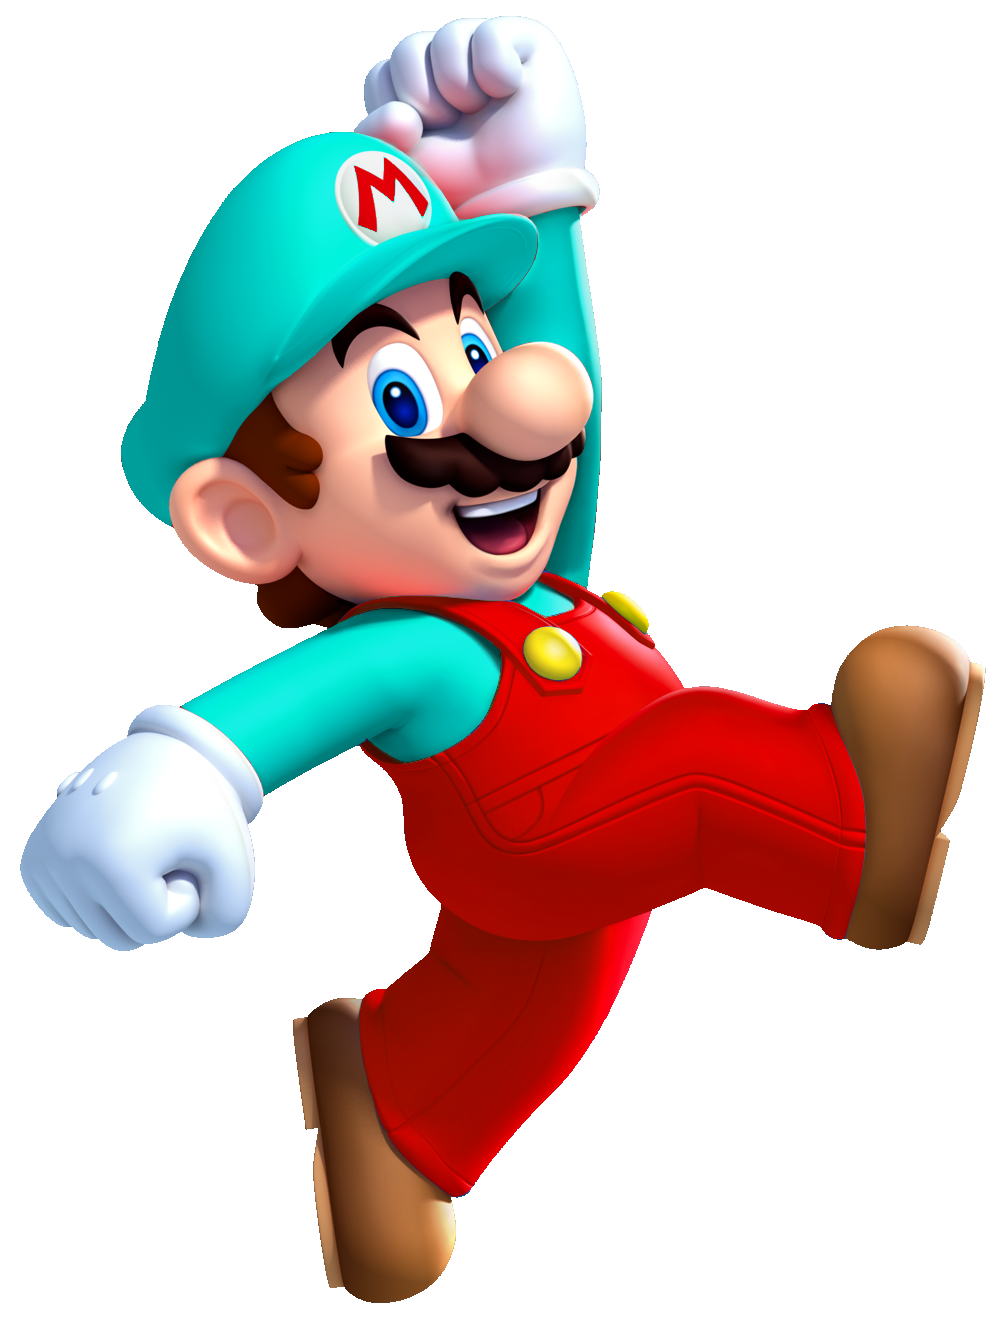 Mario multiverse. Mario (медиафраншиза). Марио 1982. Марио персонажи. Марио (персонаж игр) персонажи игр Mario.